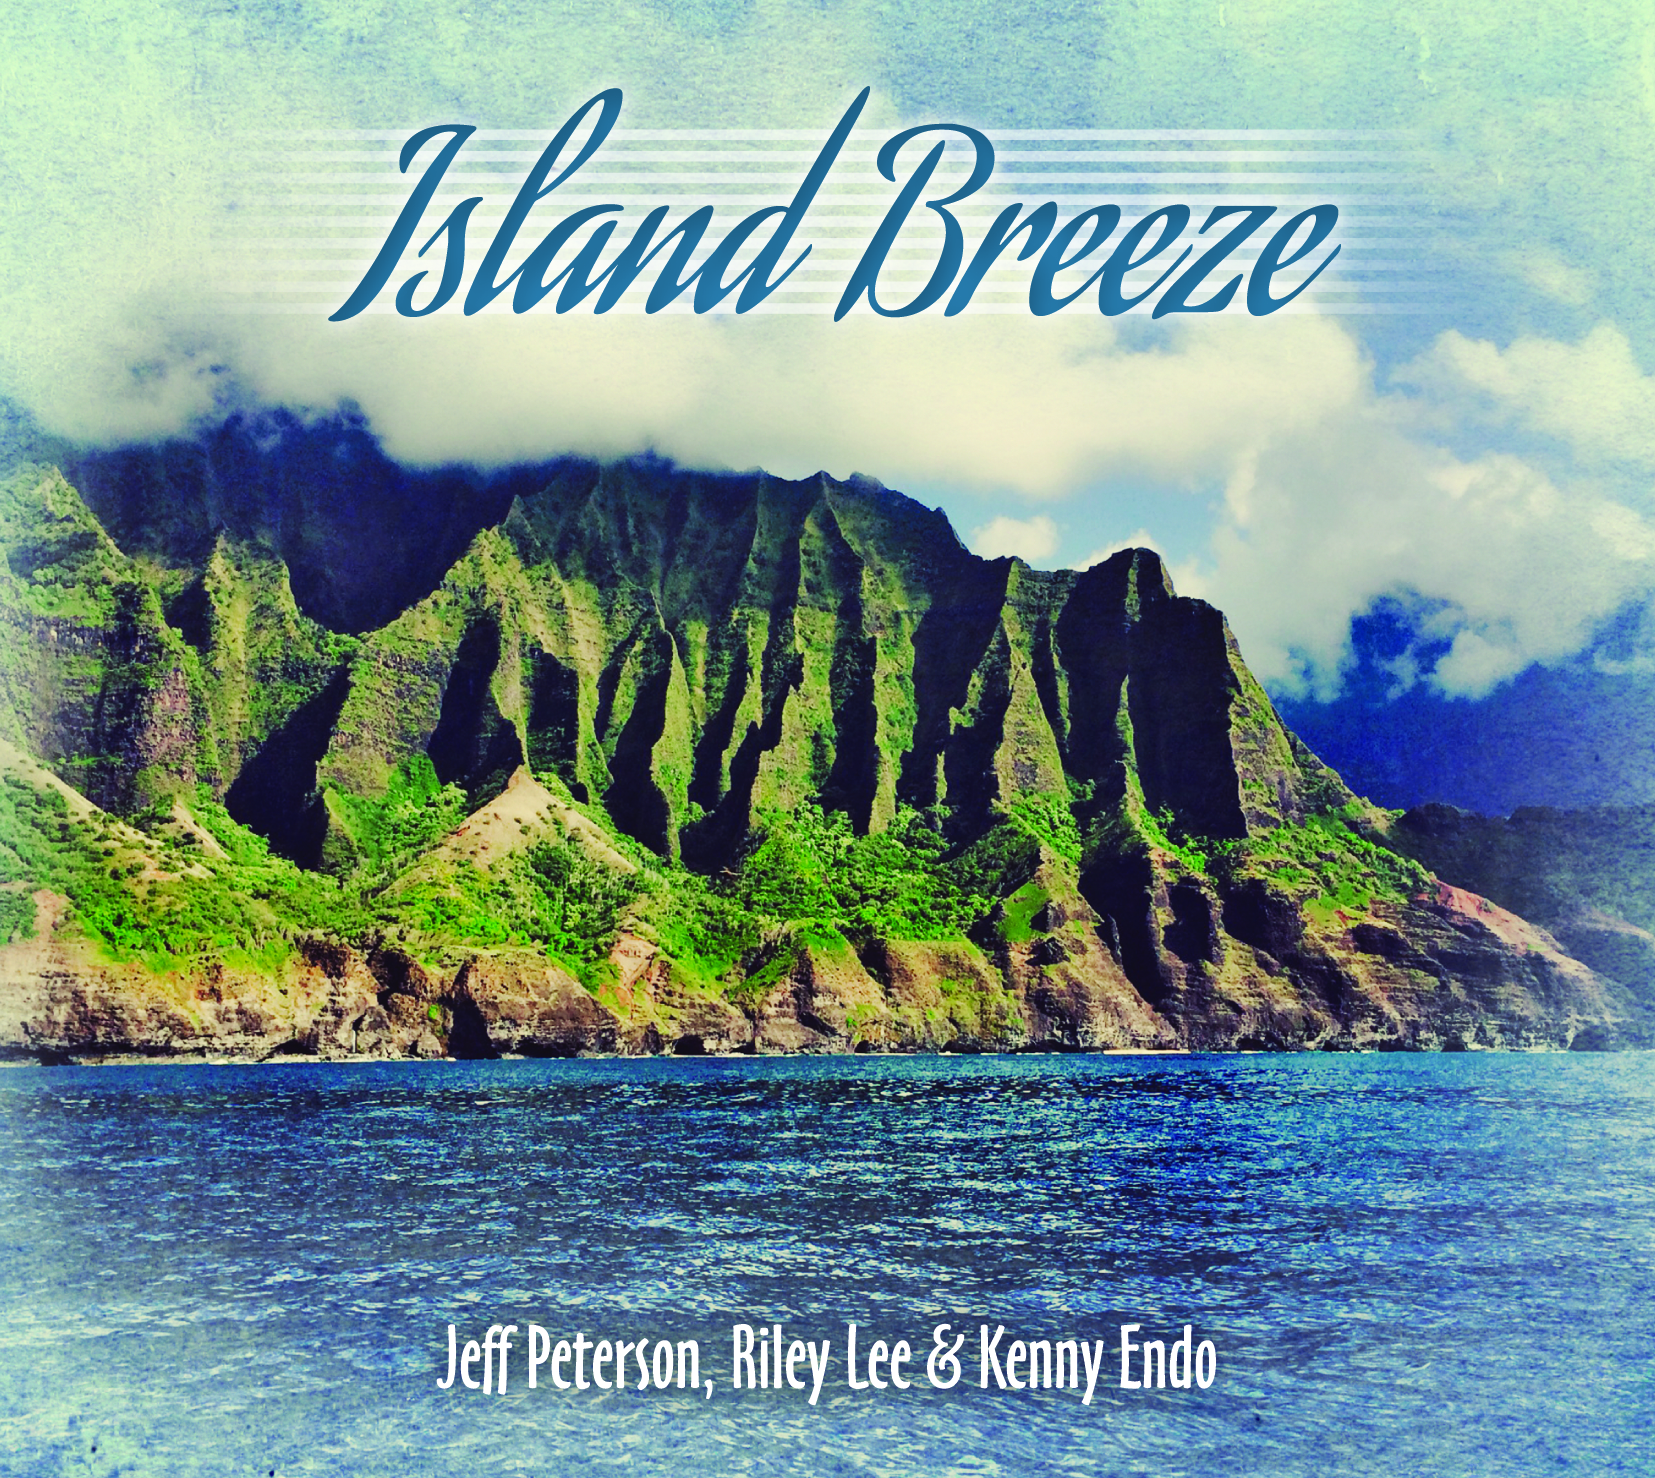 Island Breeze - Jeff Peterson